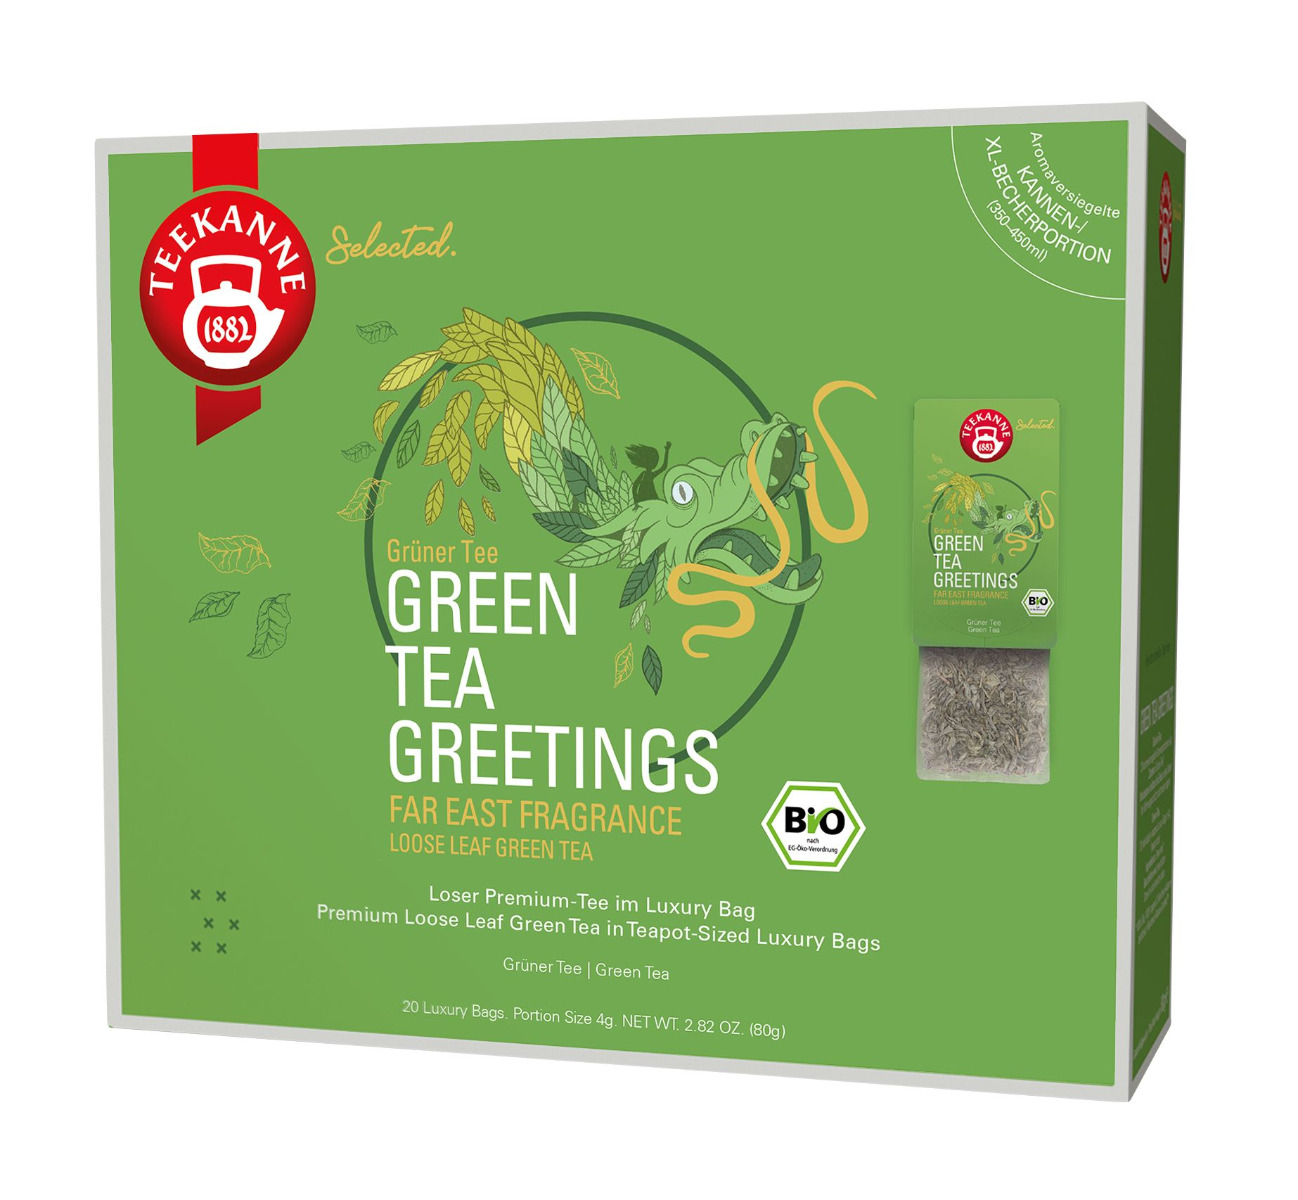 Teekanne Green Tea Greetings Luxury Bags BIO 20x4 g Teekanne